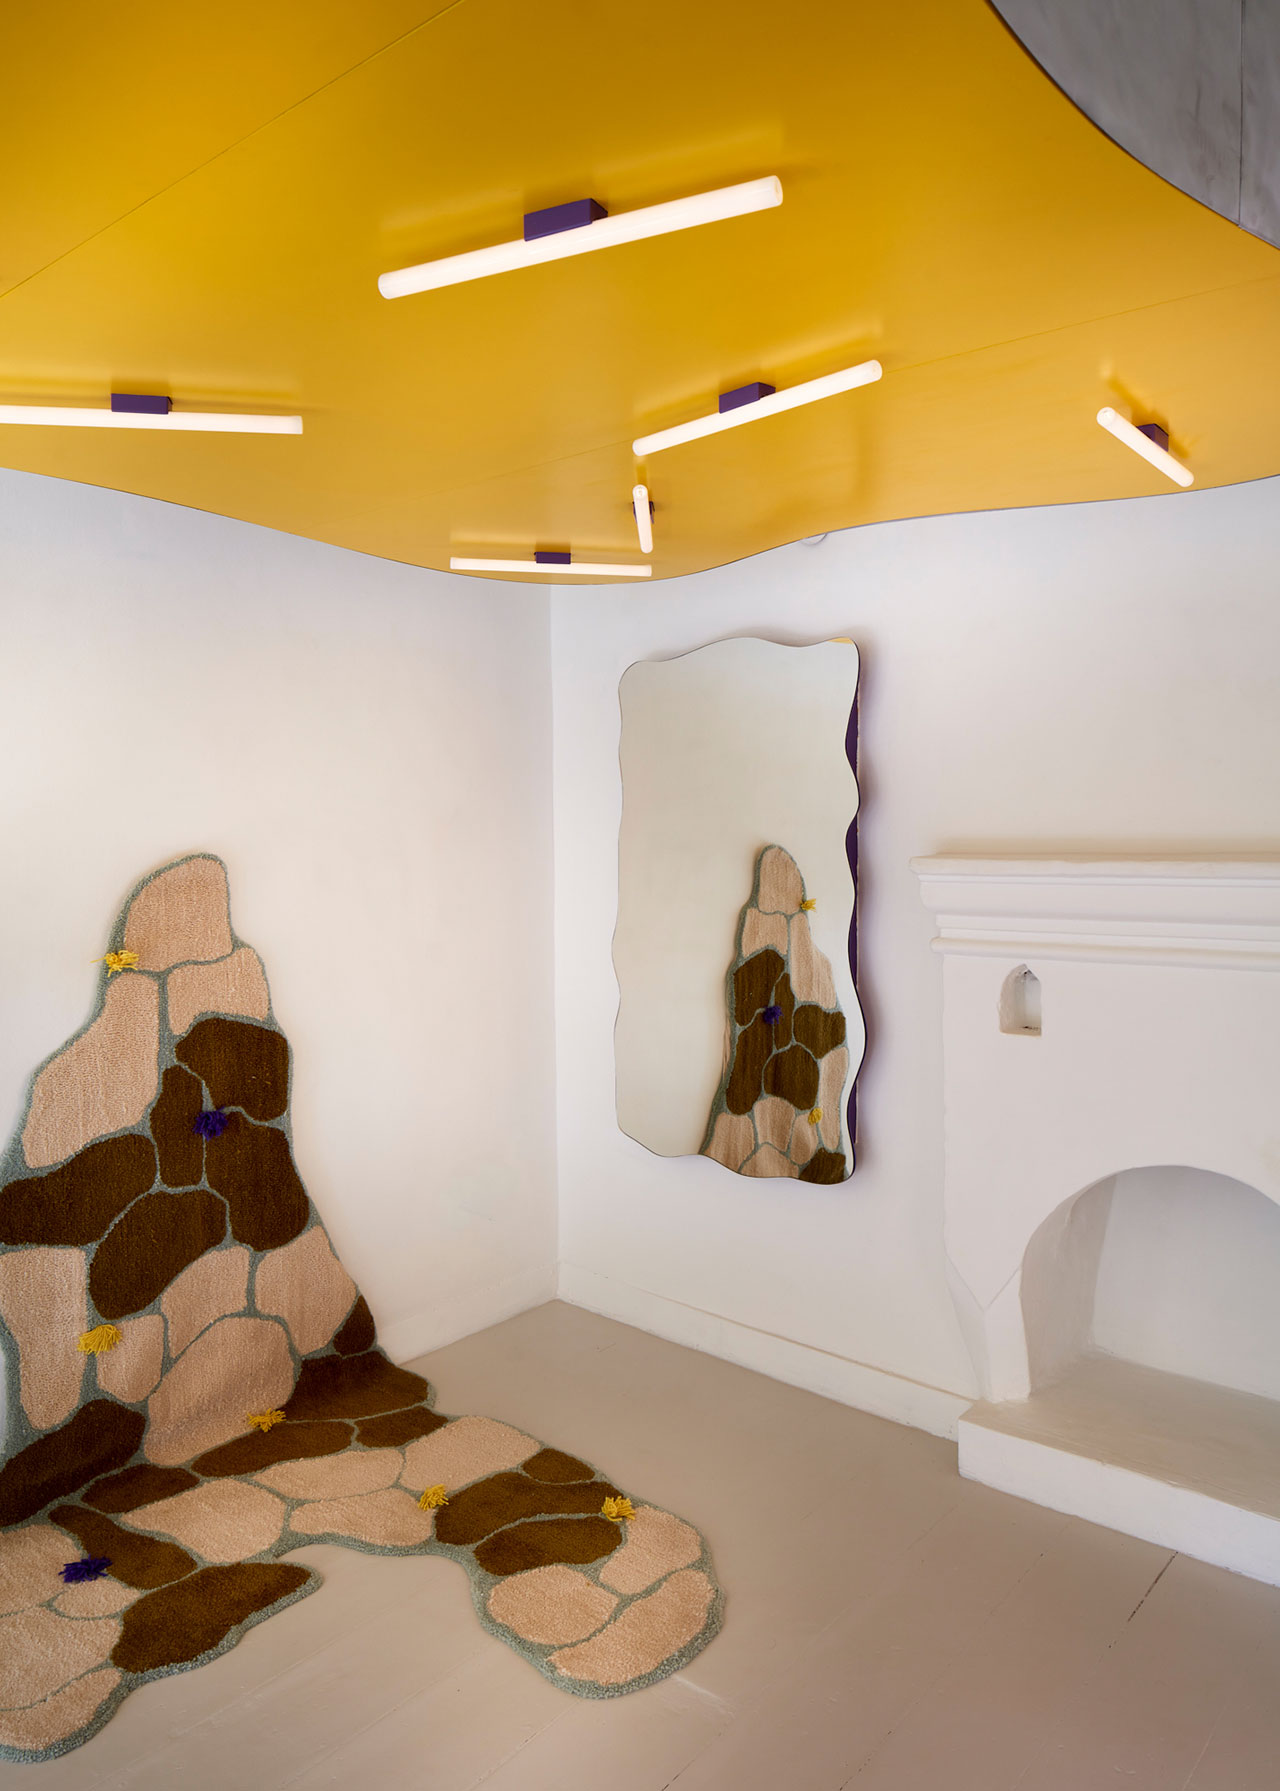 4Rooms Kastellorizo. Interior design project for La Società delle Api residency program. Room designed by UND.studio. Photography by Depasquale+Maffini.